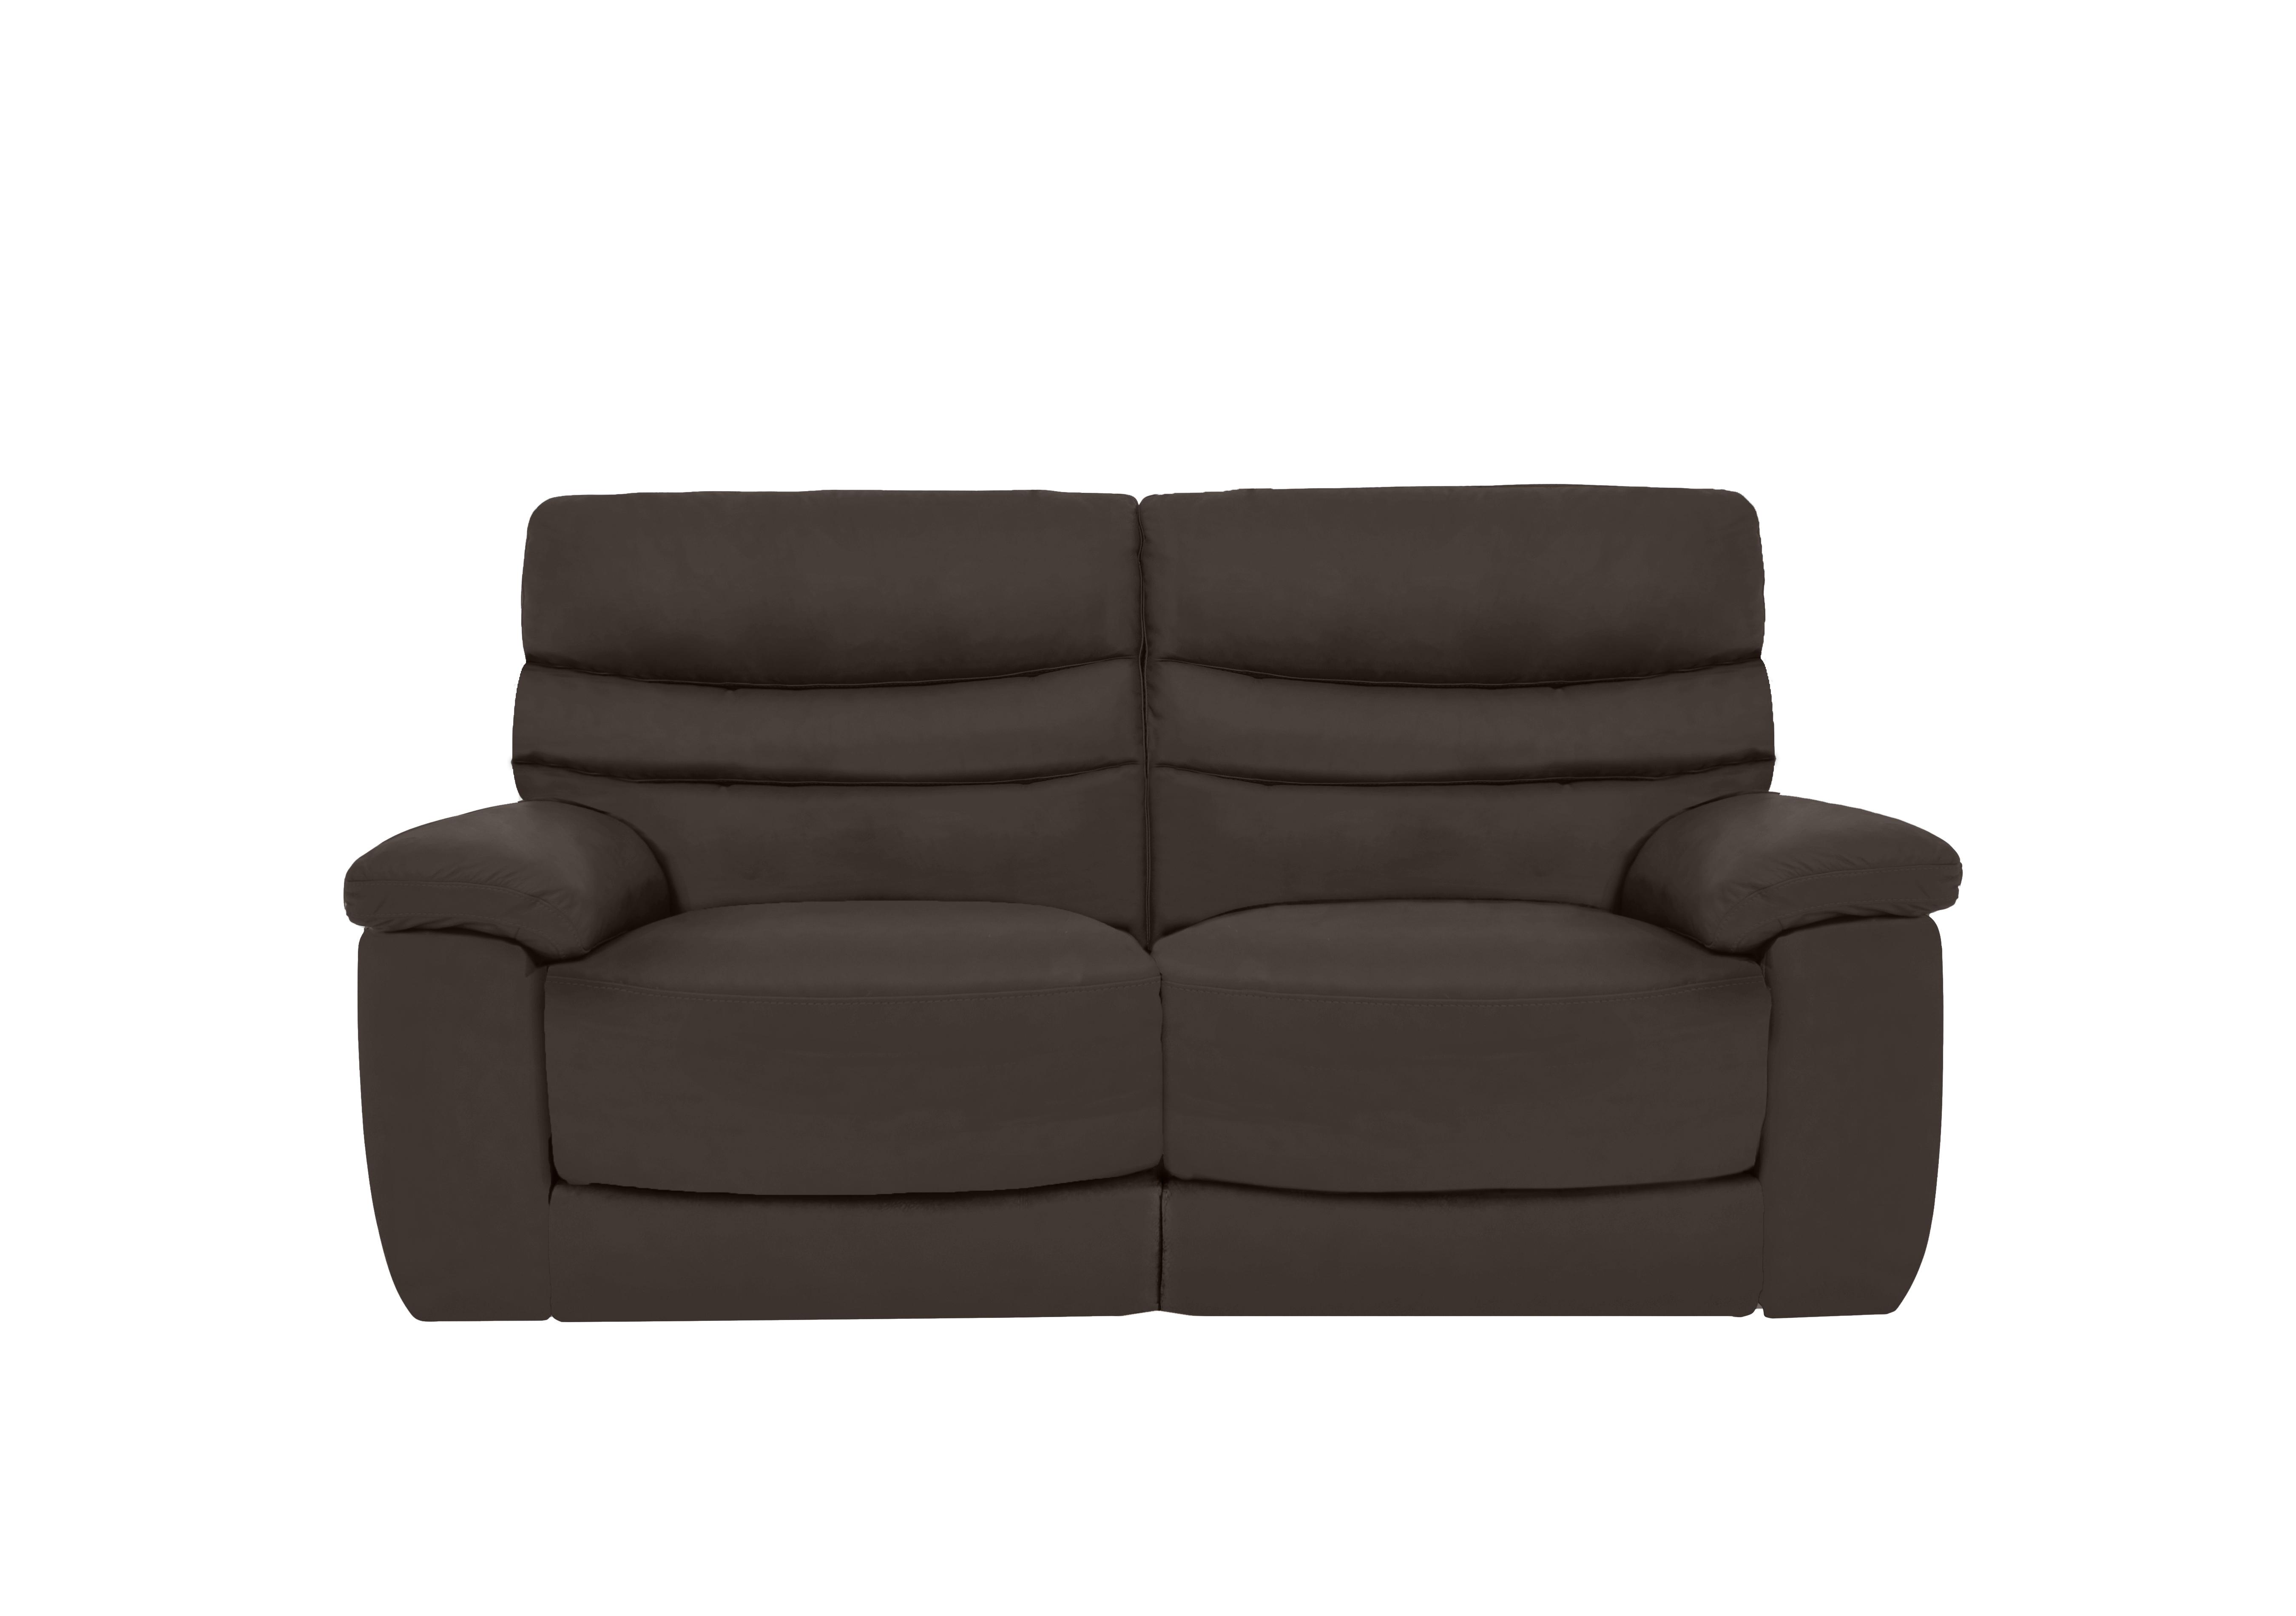 Nimbus 2 Seater Leather Sofa in Bx-037c Walnut on Furniture Village